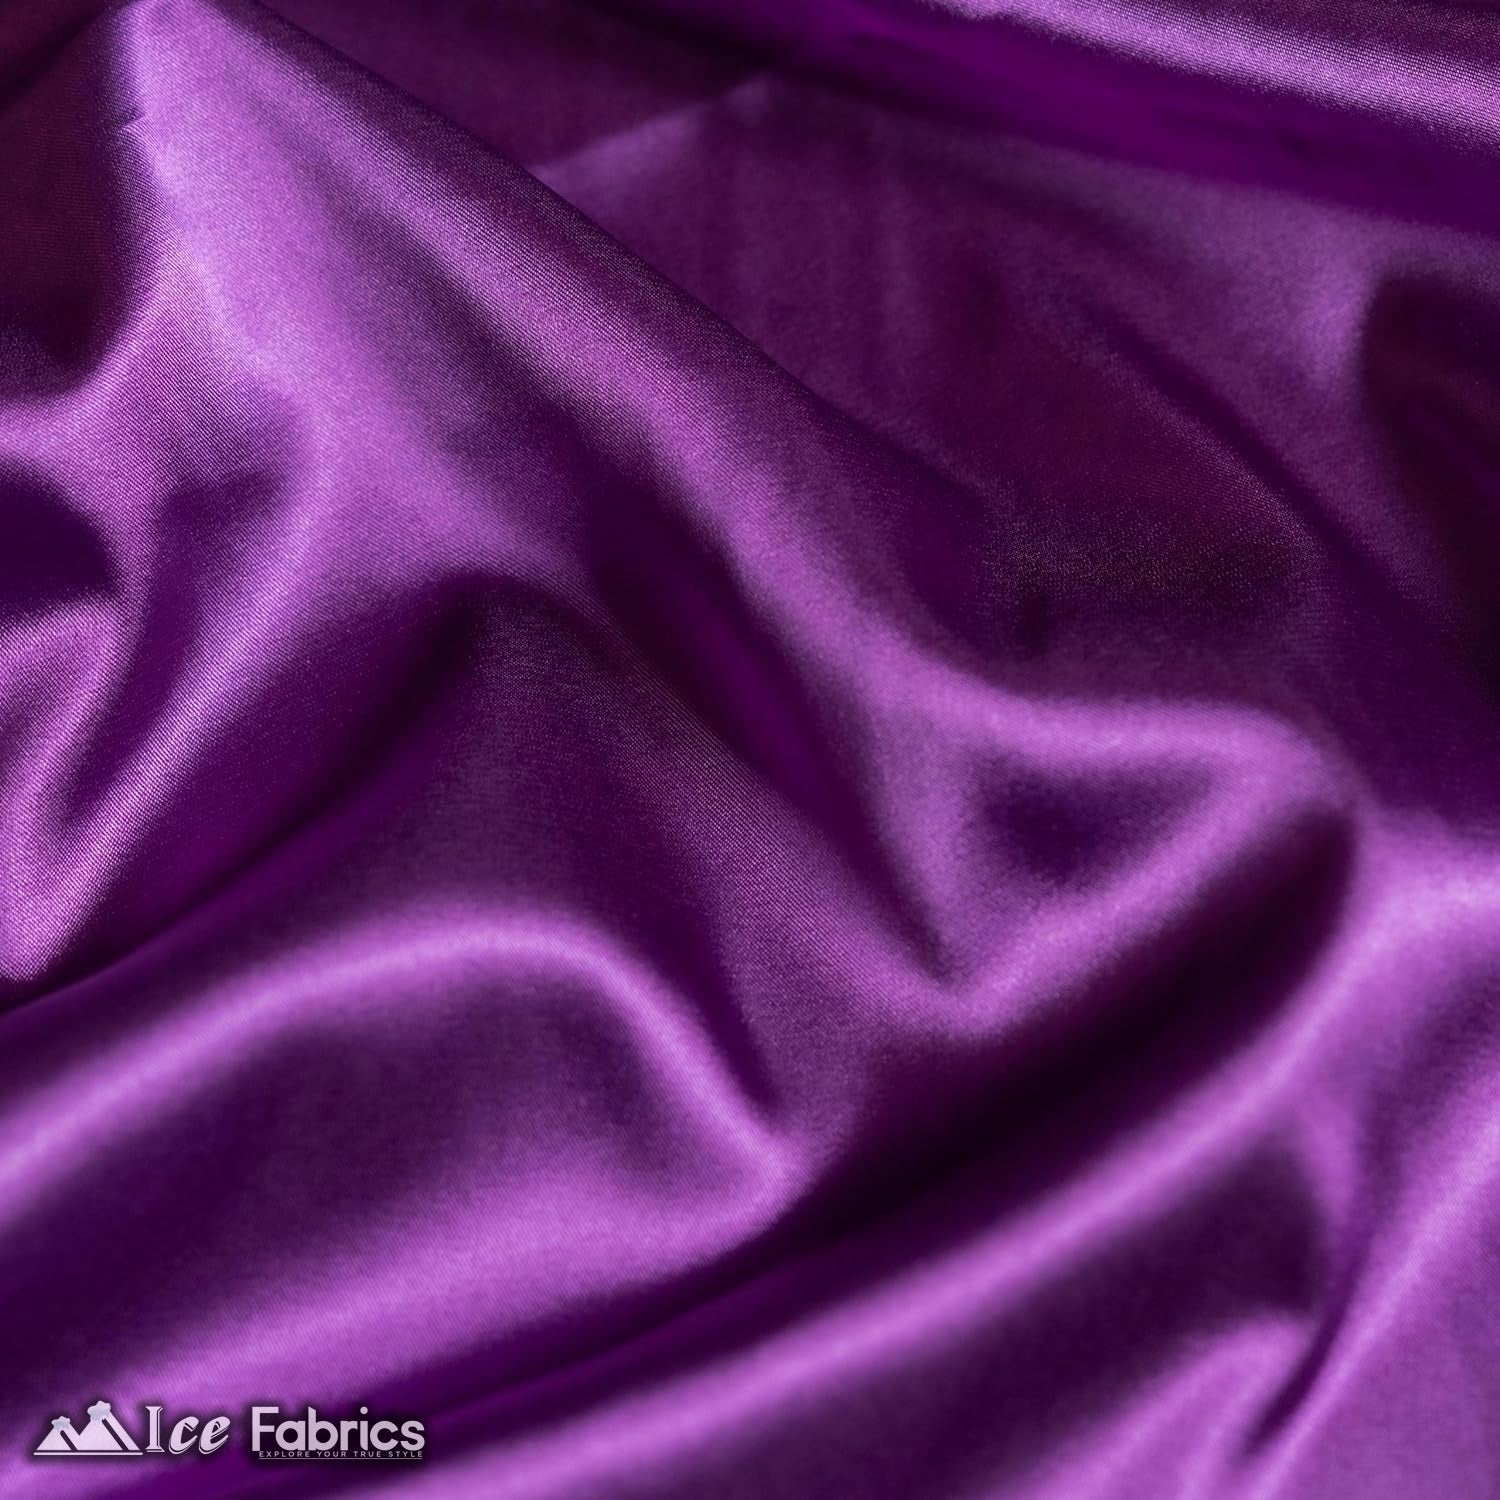 New Shiny Purple Charmeuse Stretch Satin FabricICE FABRICSICE FABRICSBy The Yard (60" Wide)New Shiny Purple Charmeuse Stretch Satin Fabric